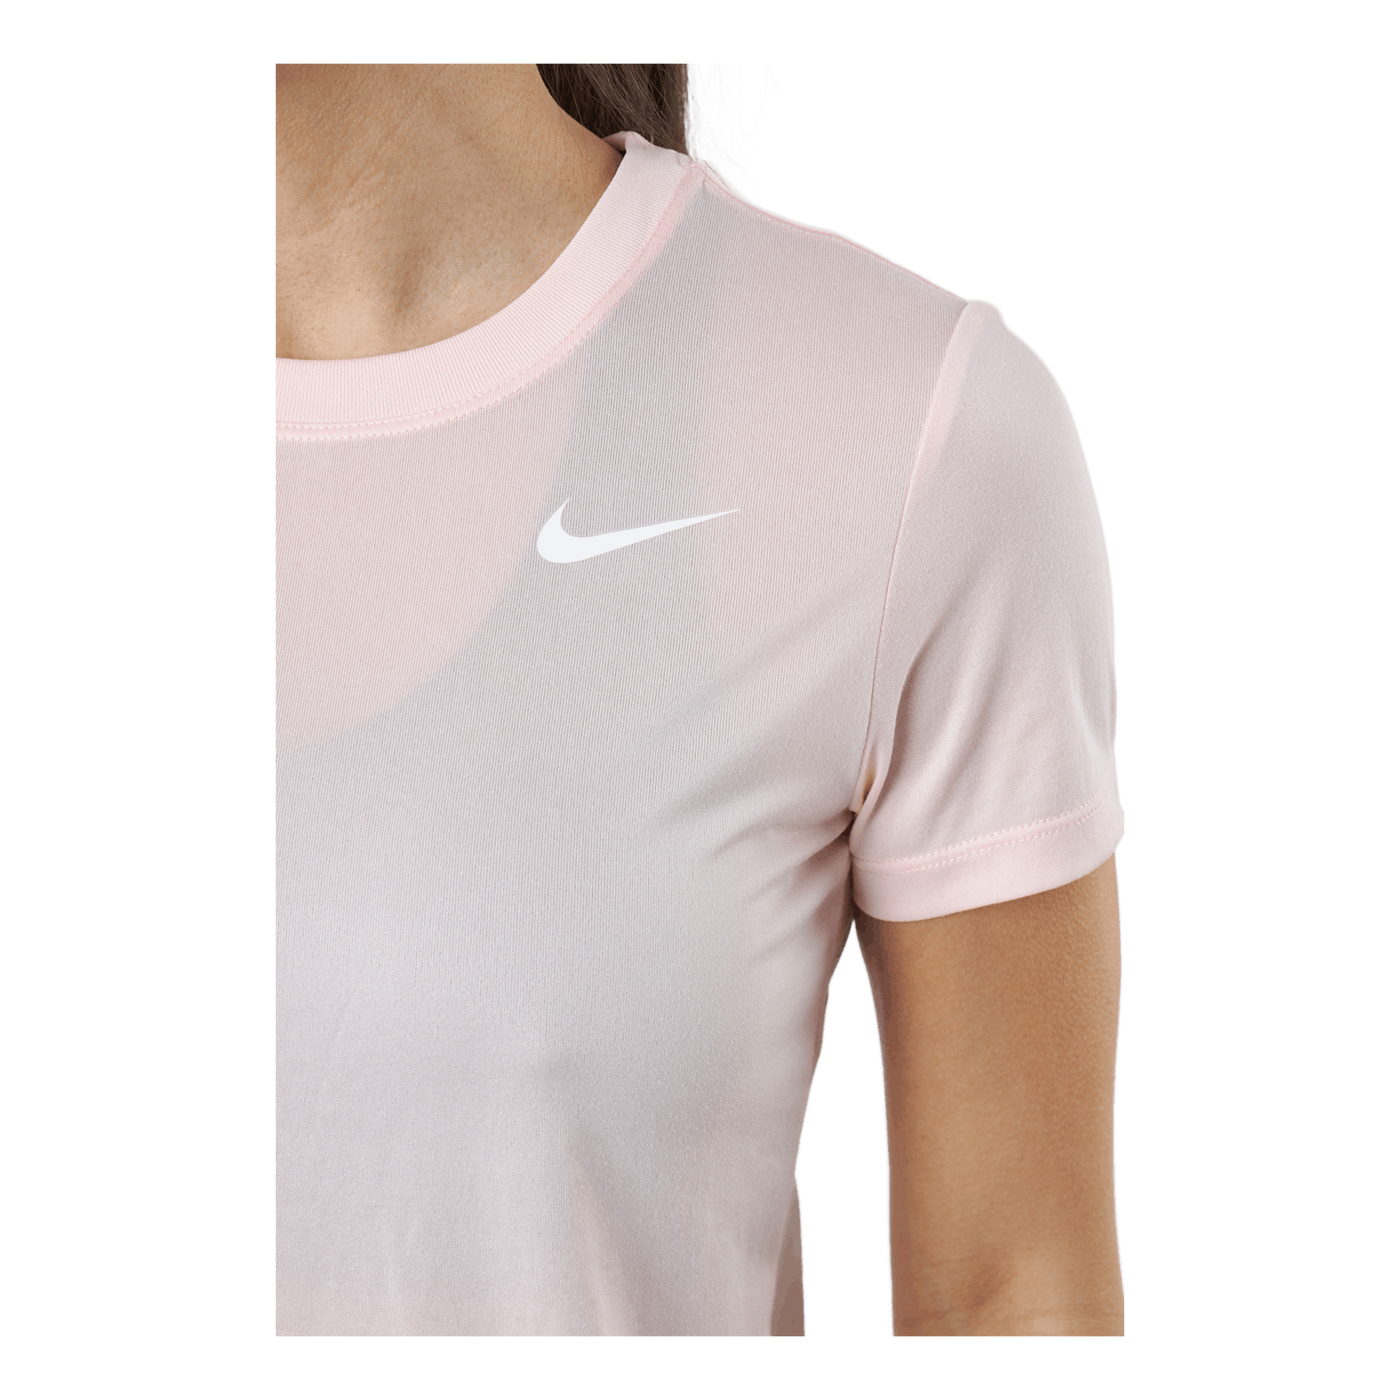 Nike Dri-fit Legend Women's Tr Atmosphere/white